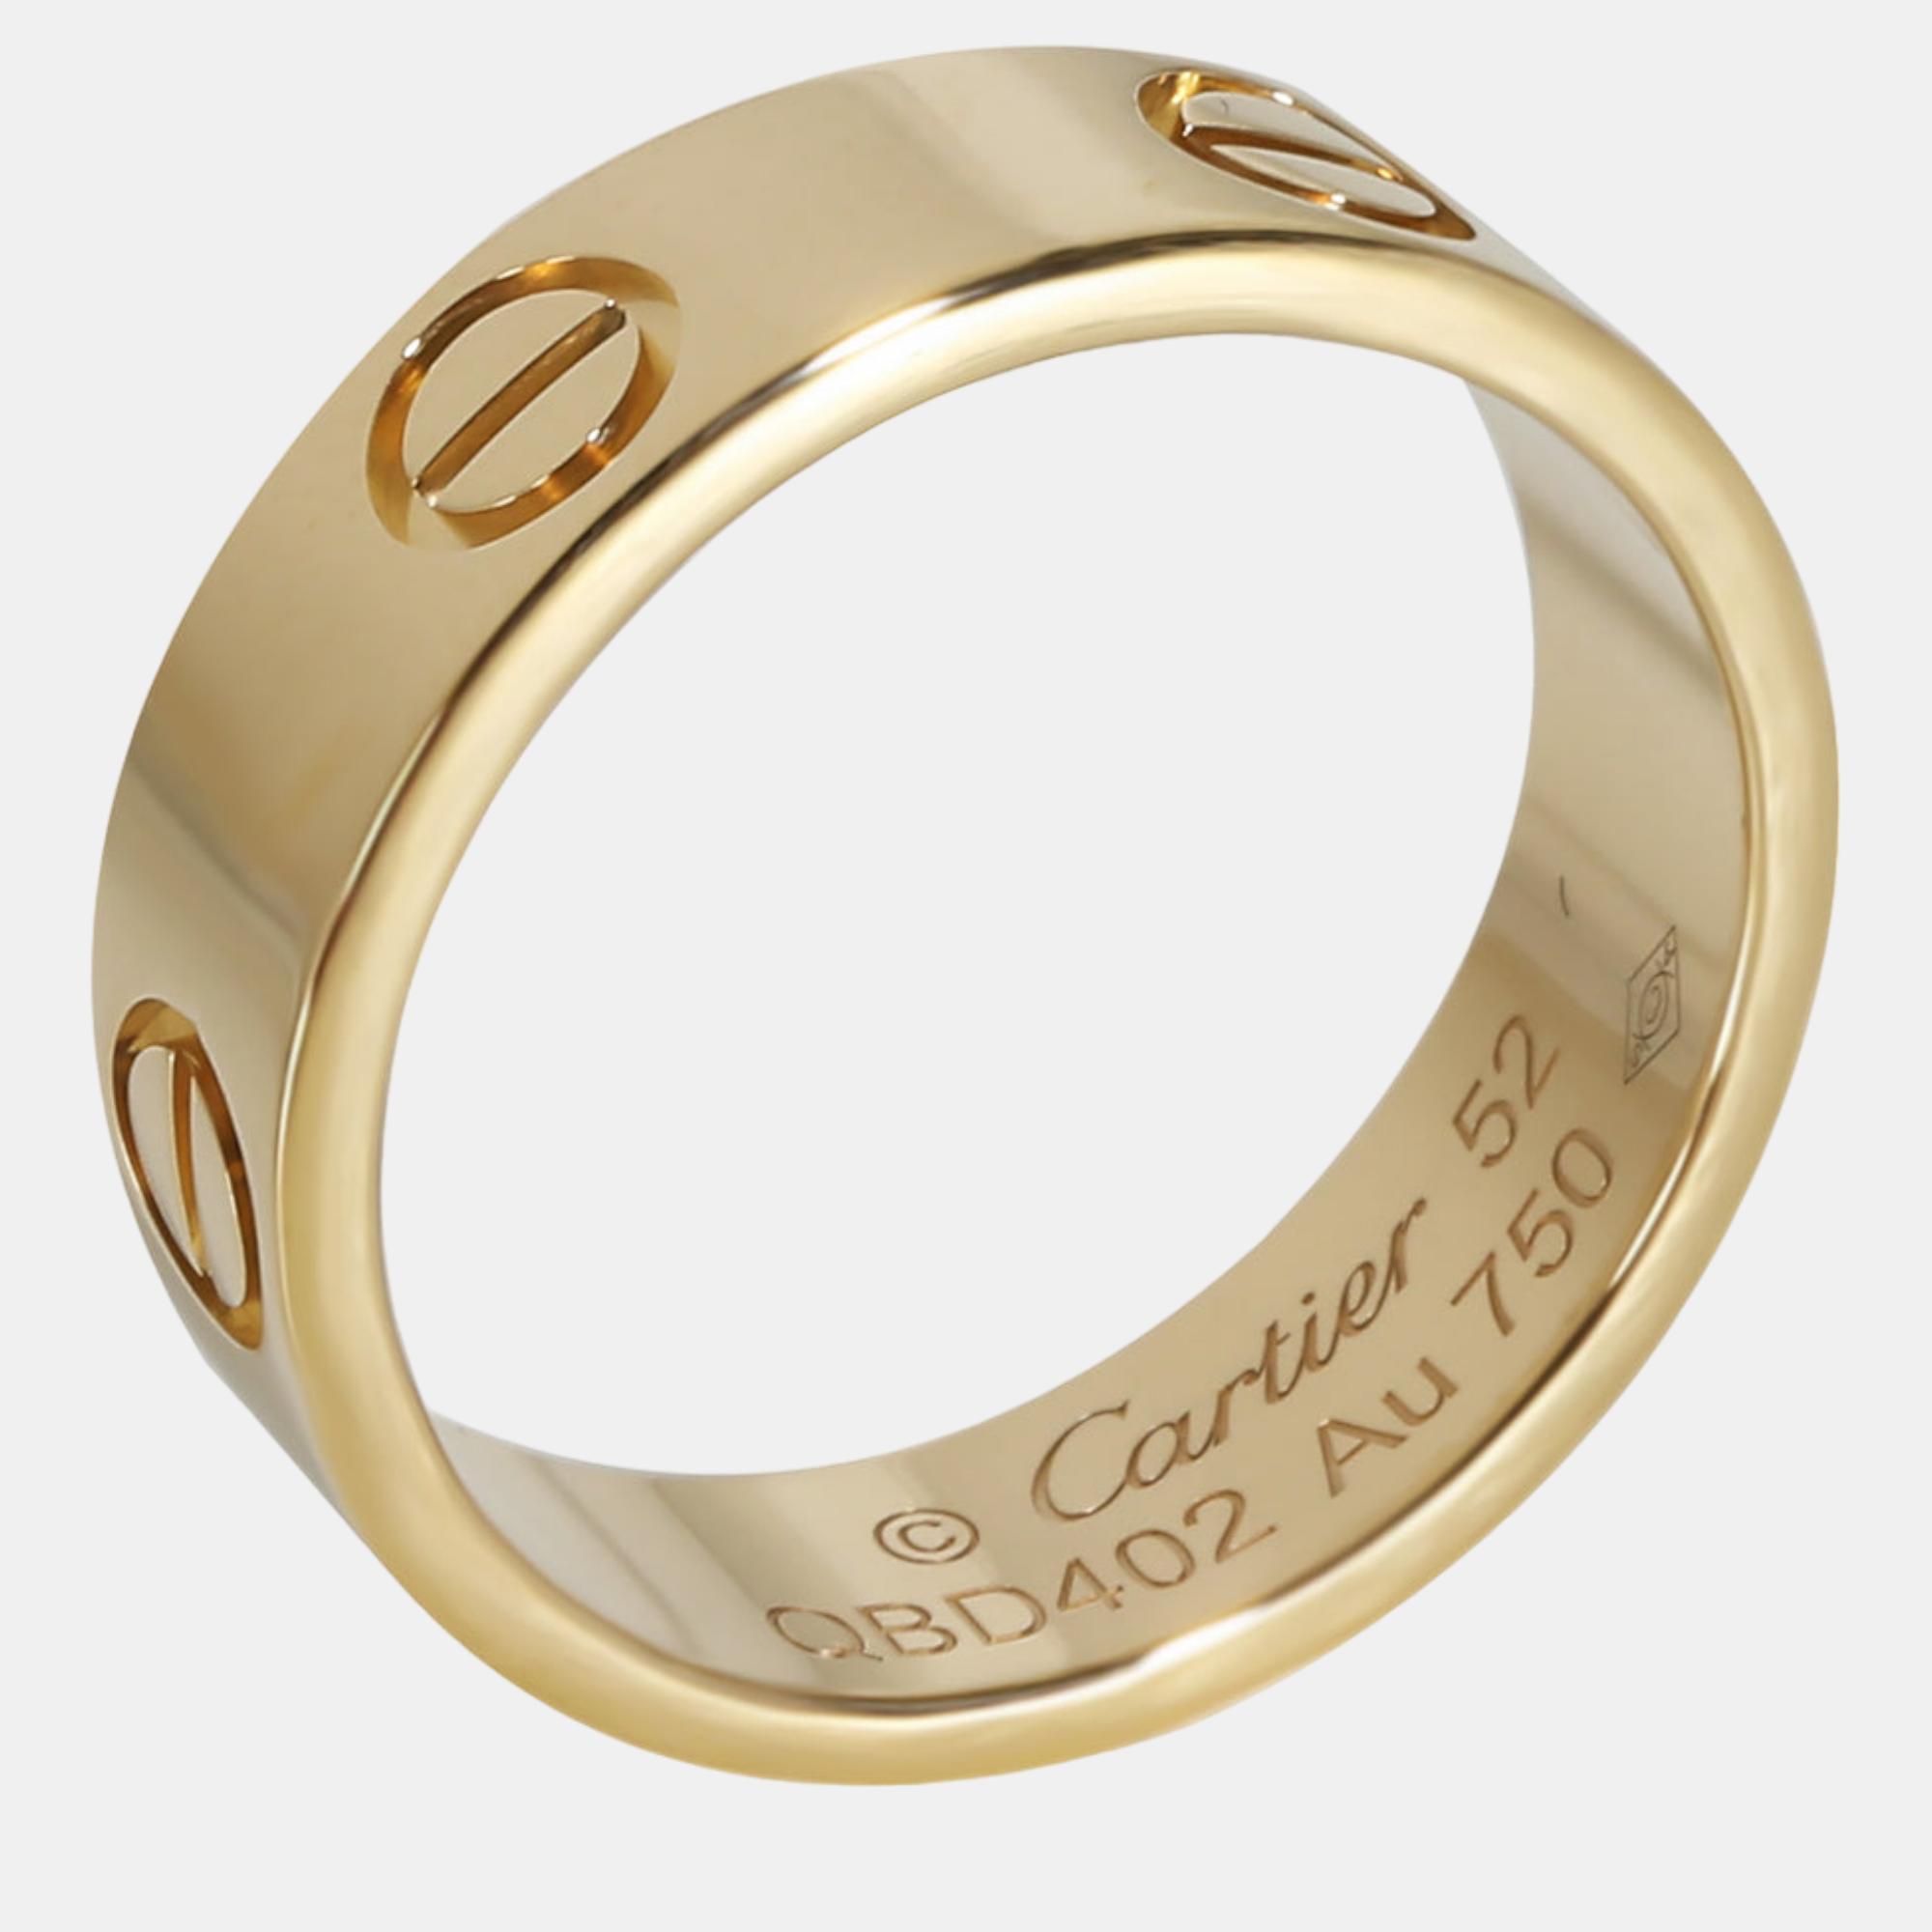 Cartier 18k yellow gold love fashion ring